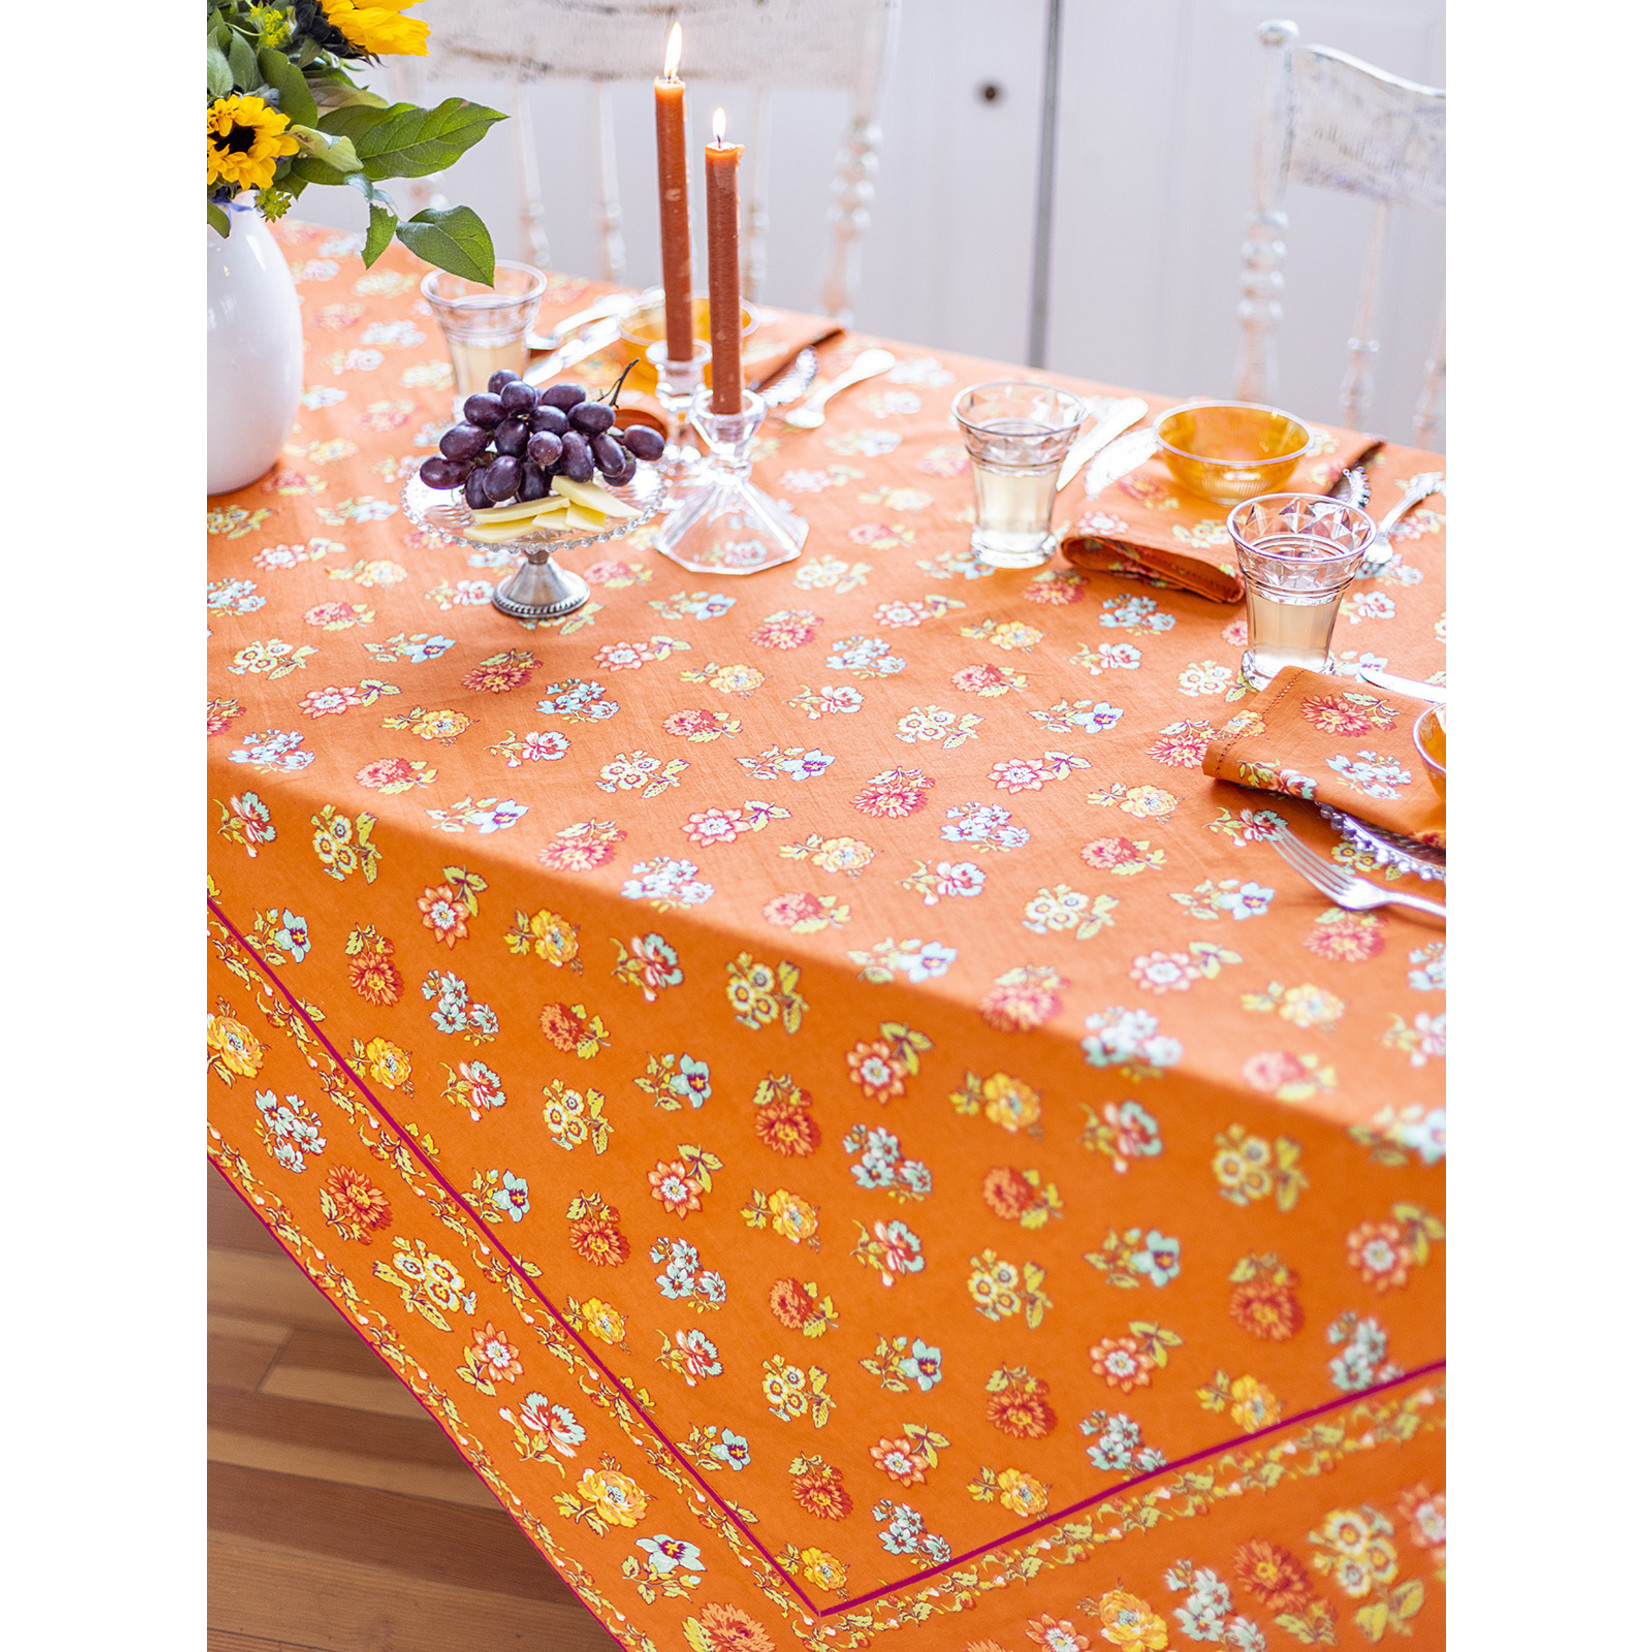 April Cornell Flower Toss Terracotta 36x36 Tablecloth